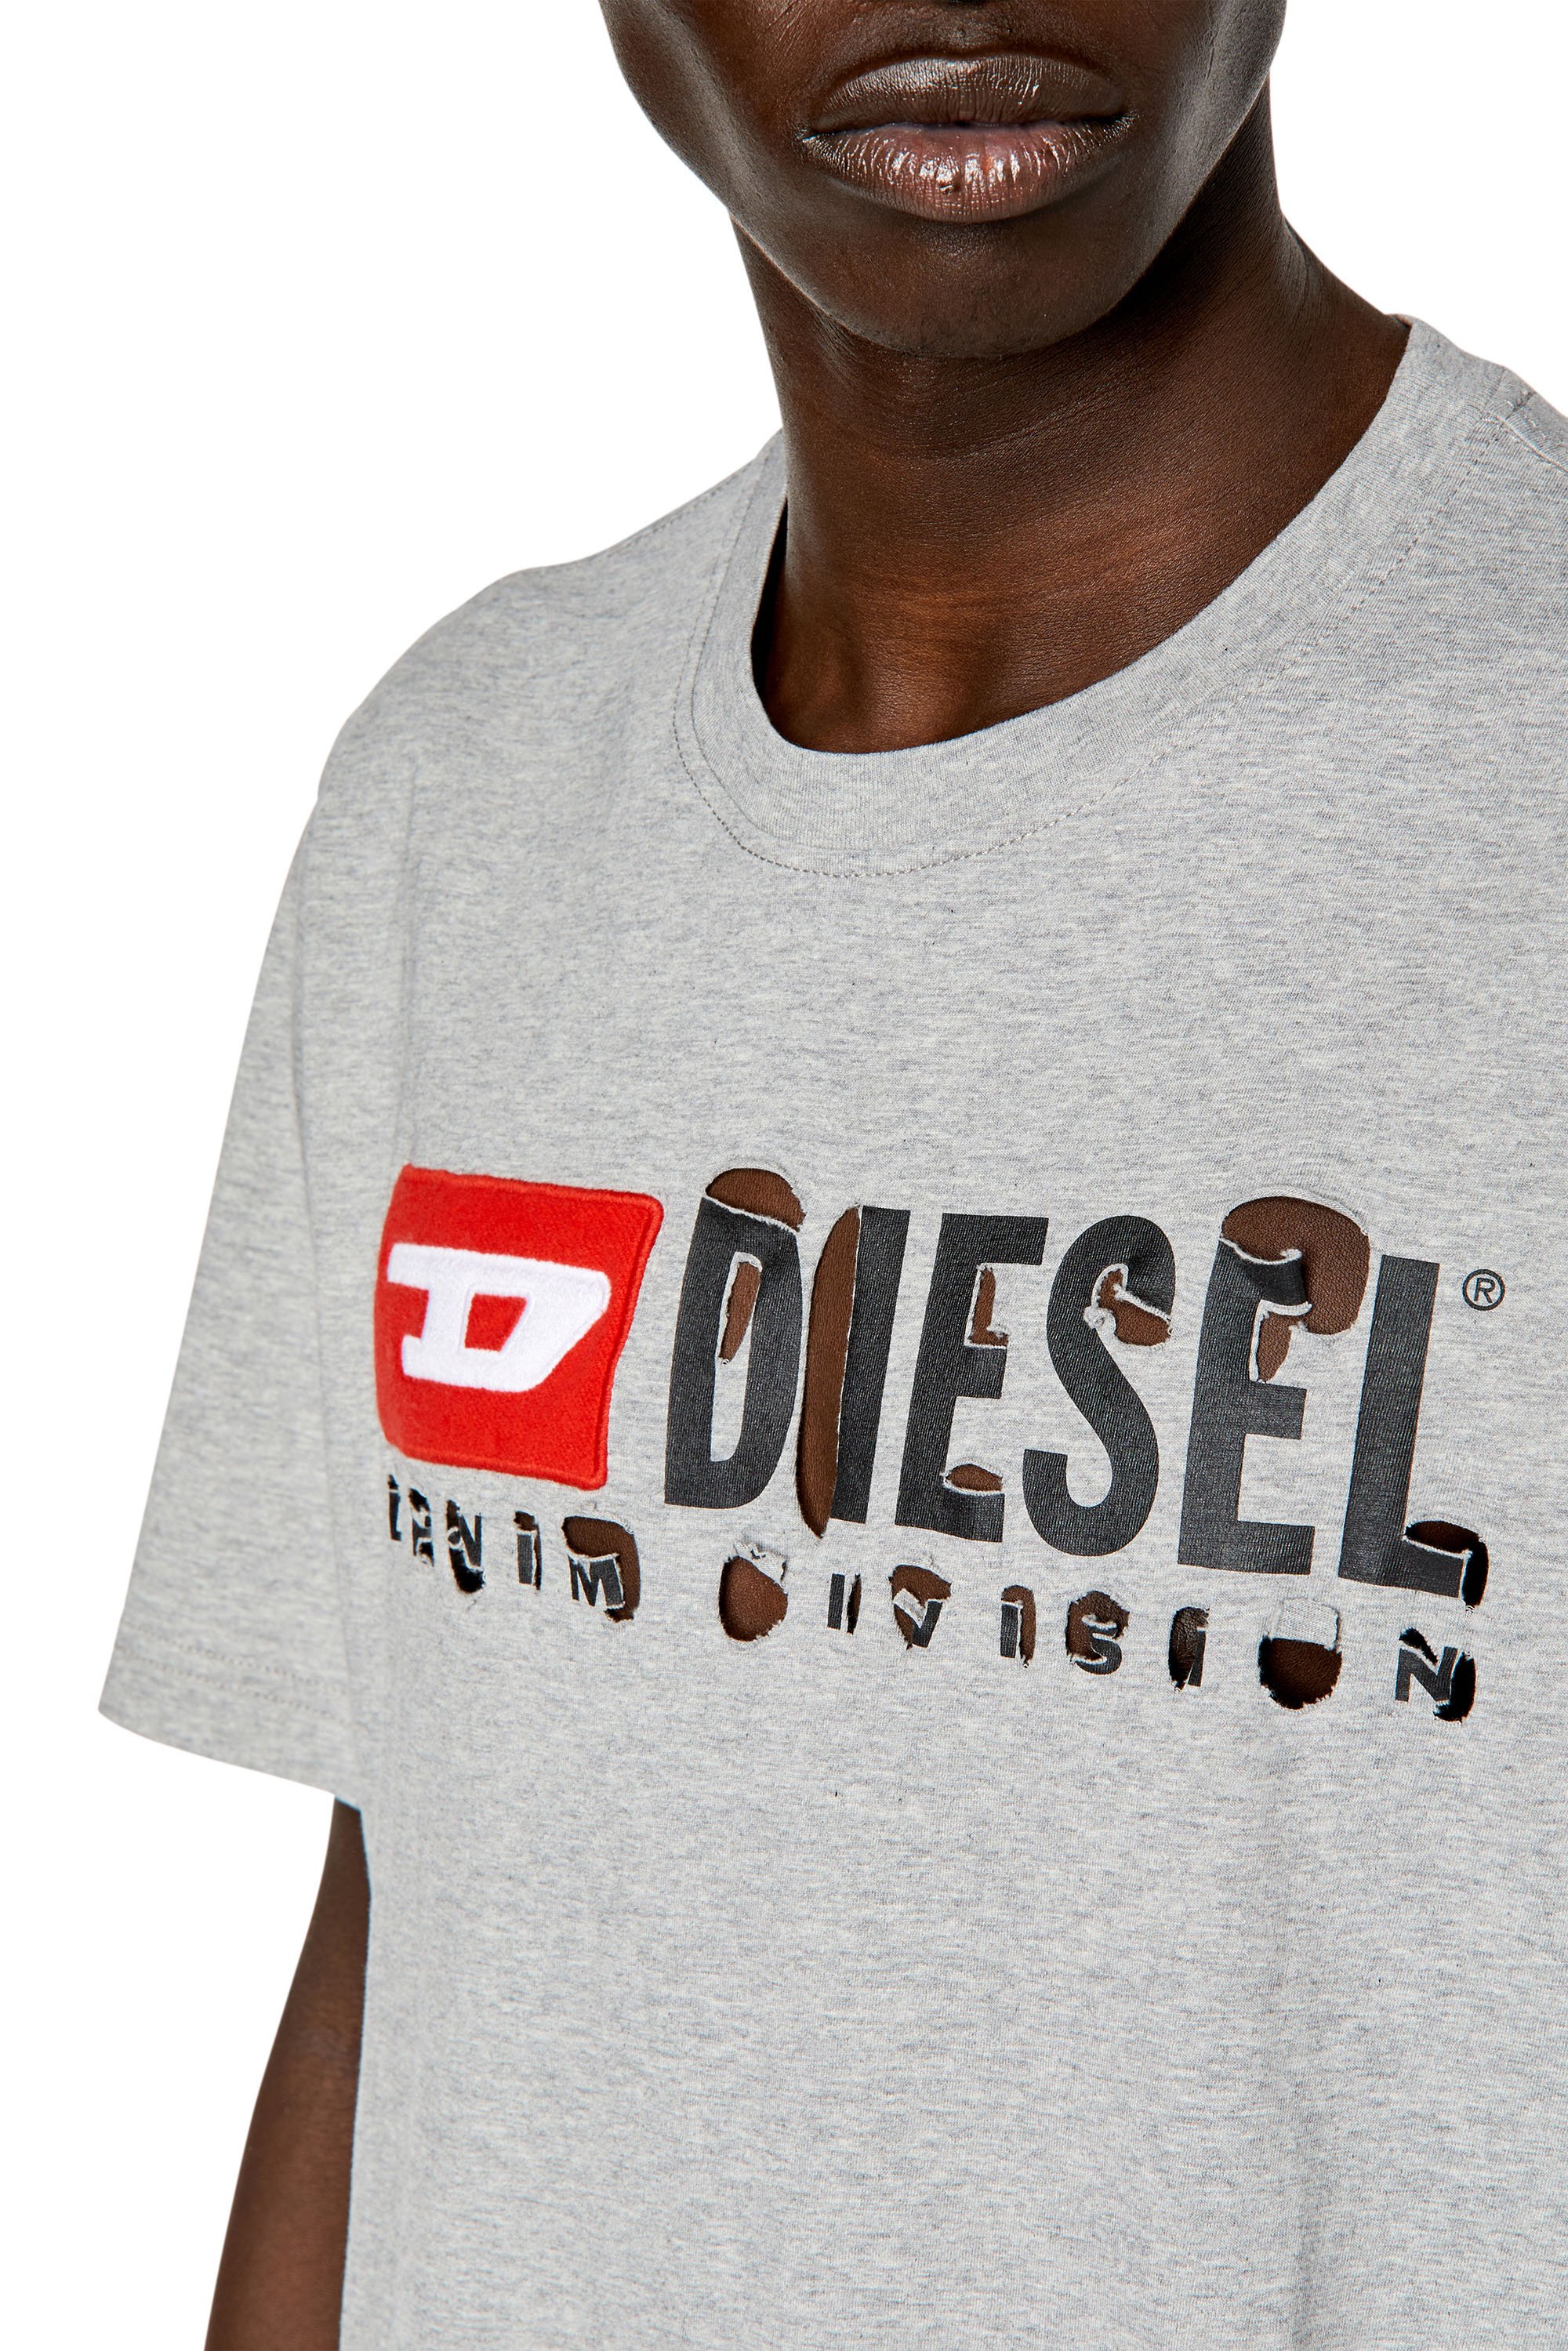 Diesel - T-JUST-DIVSTROYED, Light Grey - Image 5